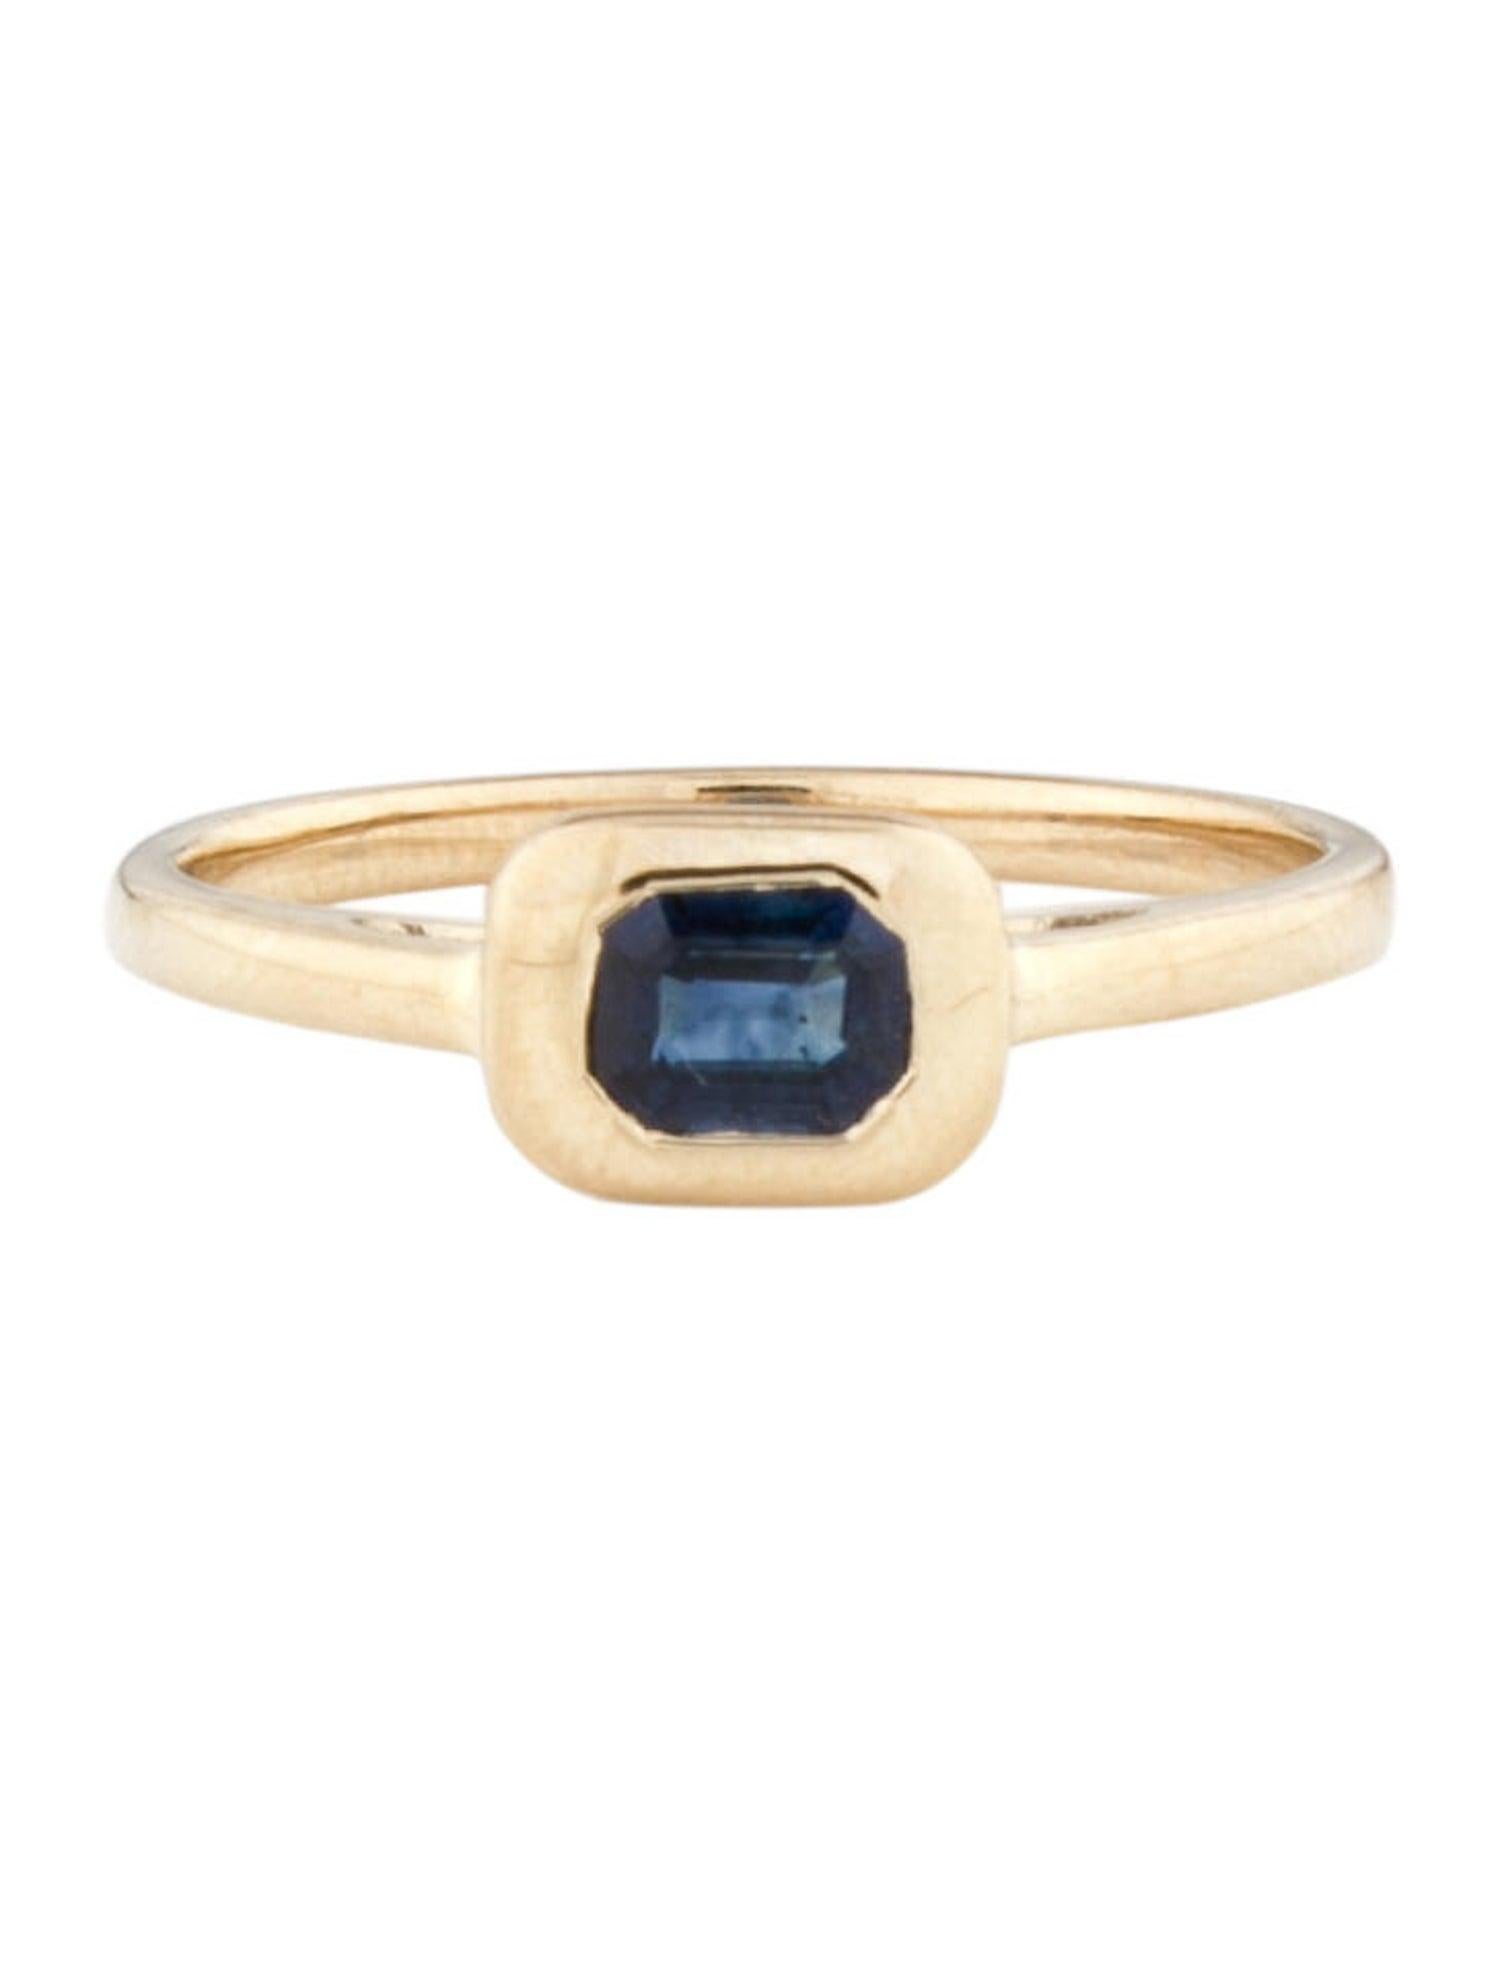 Emerald Cut 14k Yellow Gold & Emerald-Cut Blue Sapphire Ring 0.65 CTTW For Sale